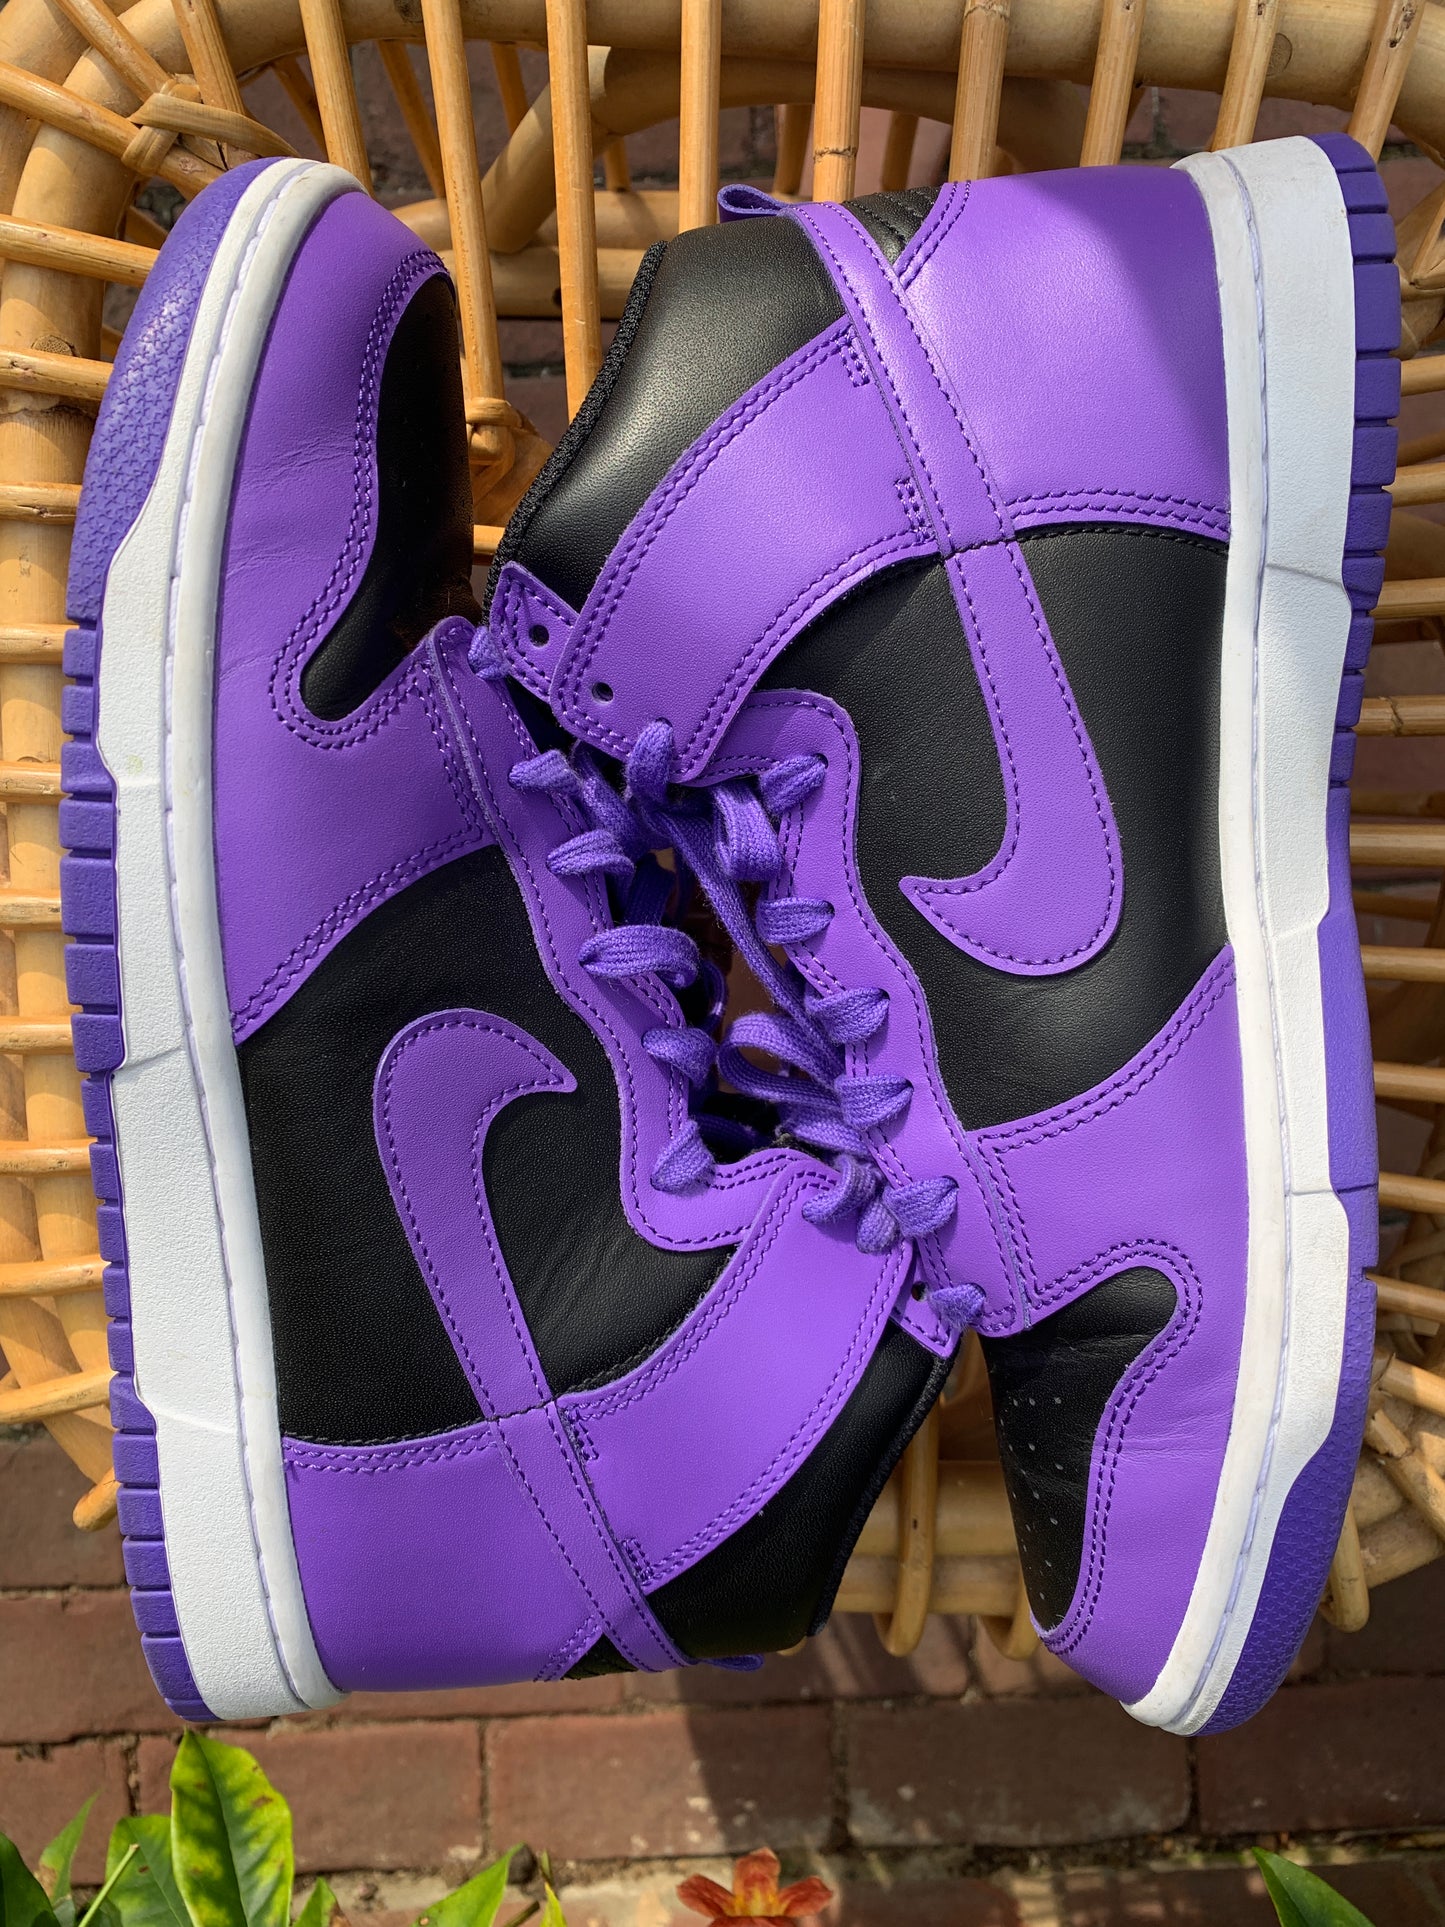 Women's Nike Dunk High Retro Purple, Black Sneakers Sz. 9